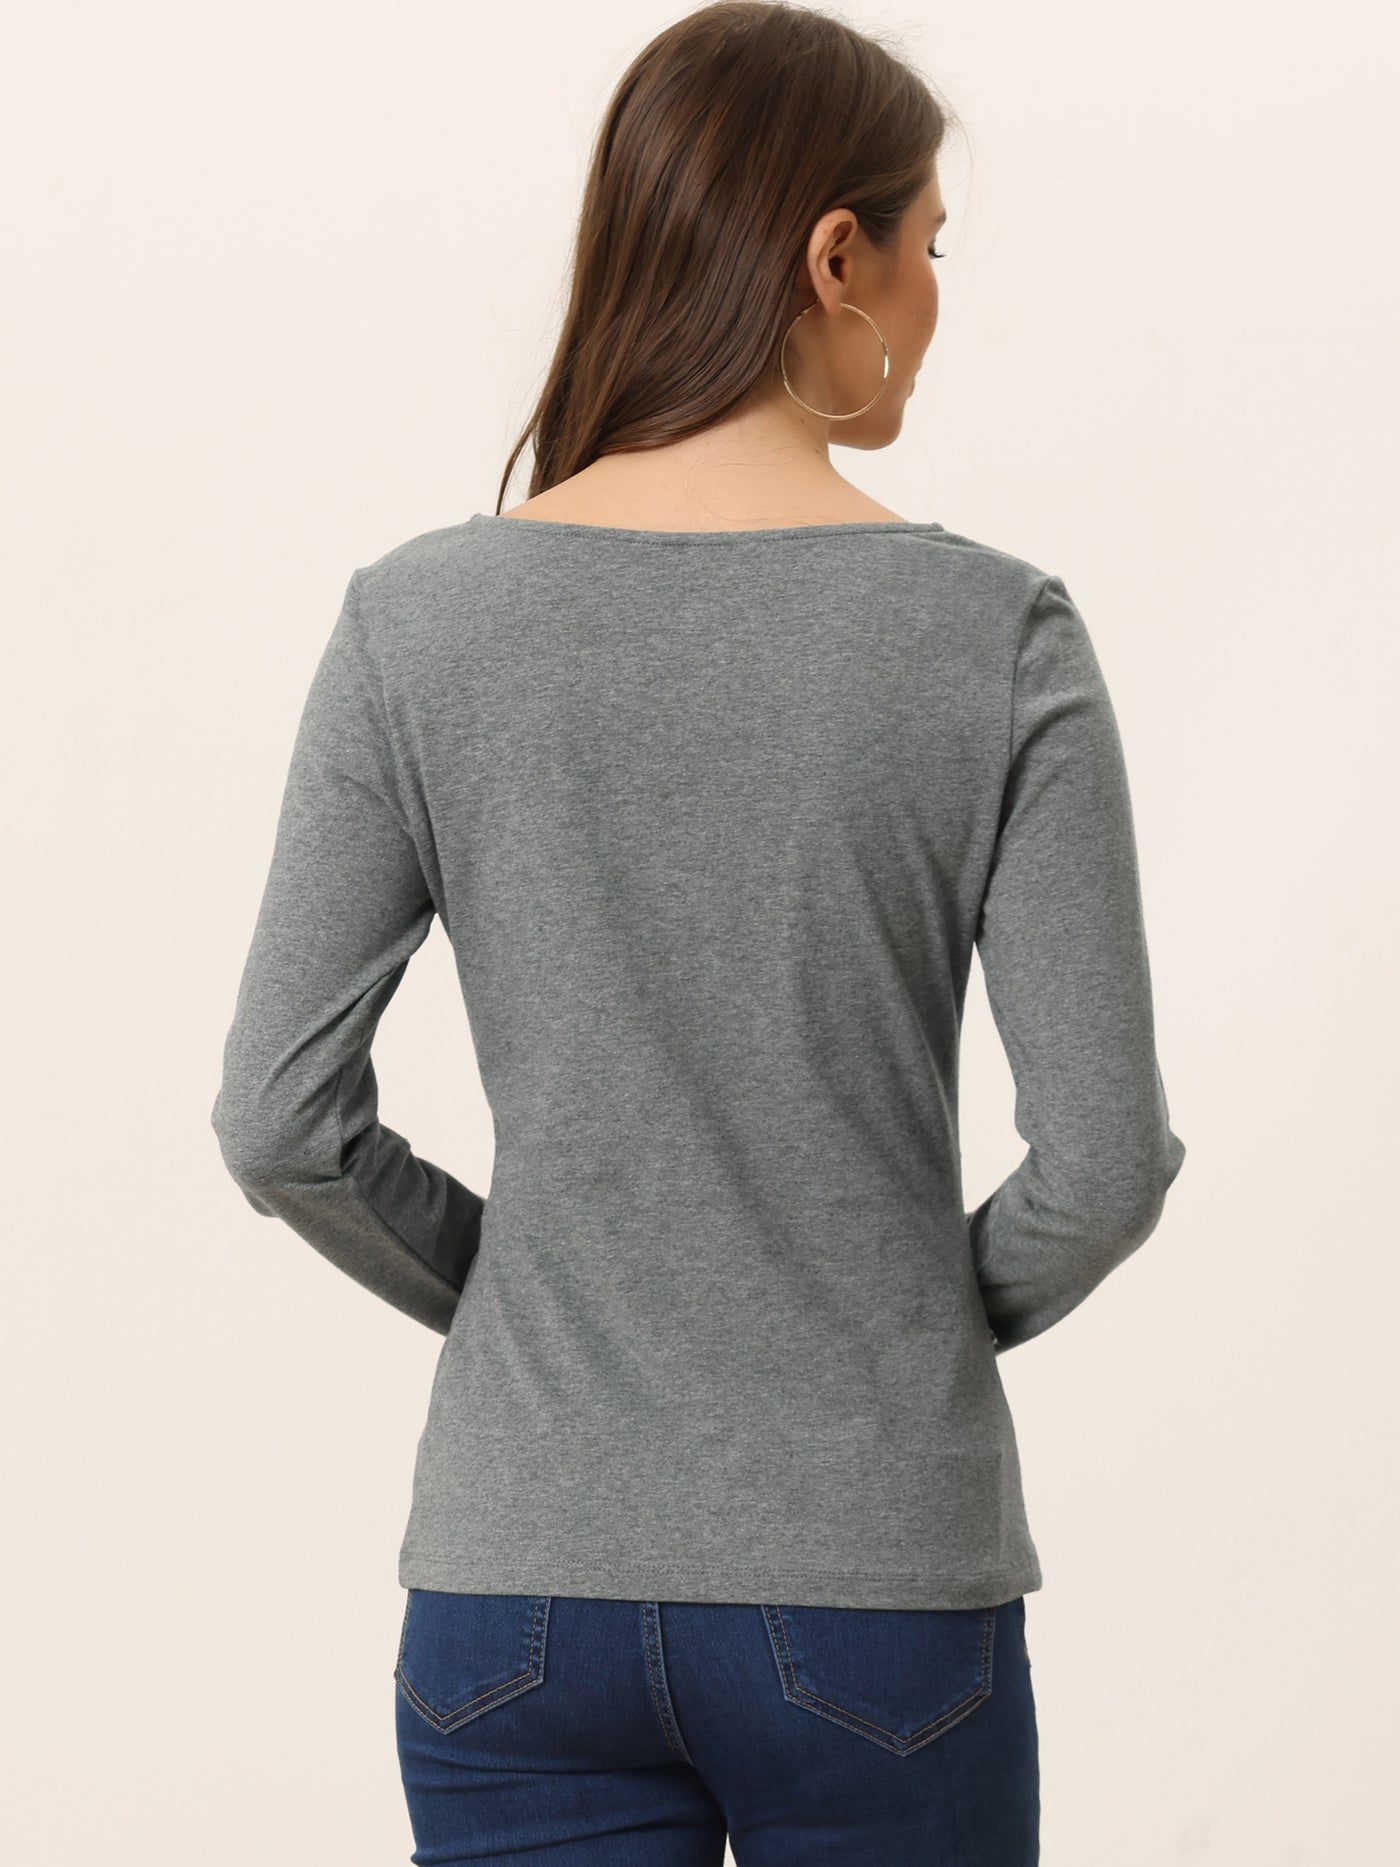 Allegra K Round Neck Front Twist Tops Long Sleeve Blouse T Shirt